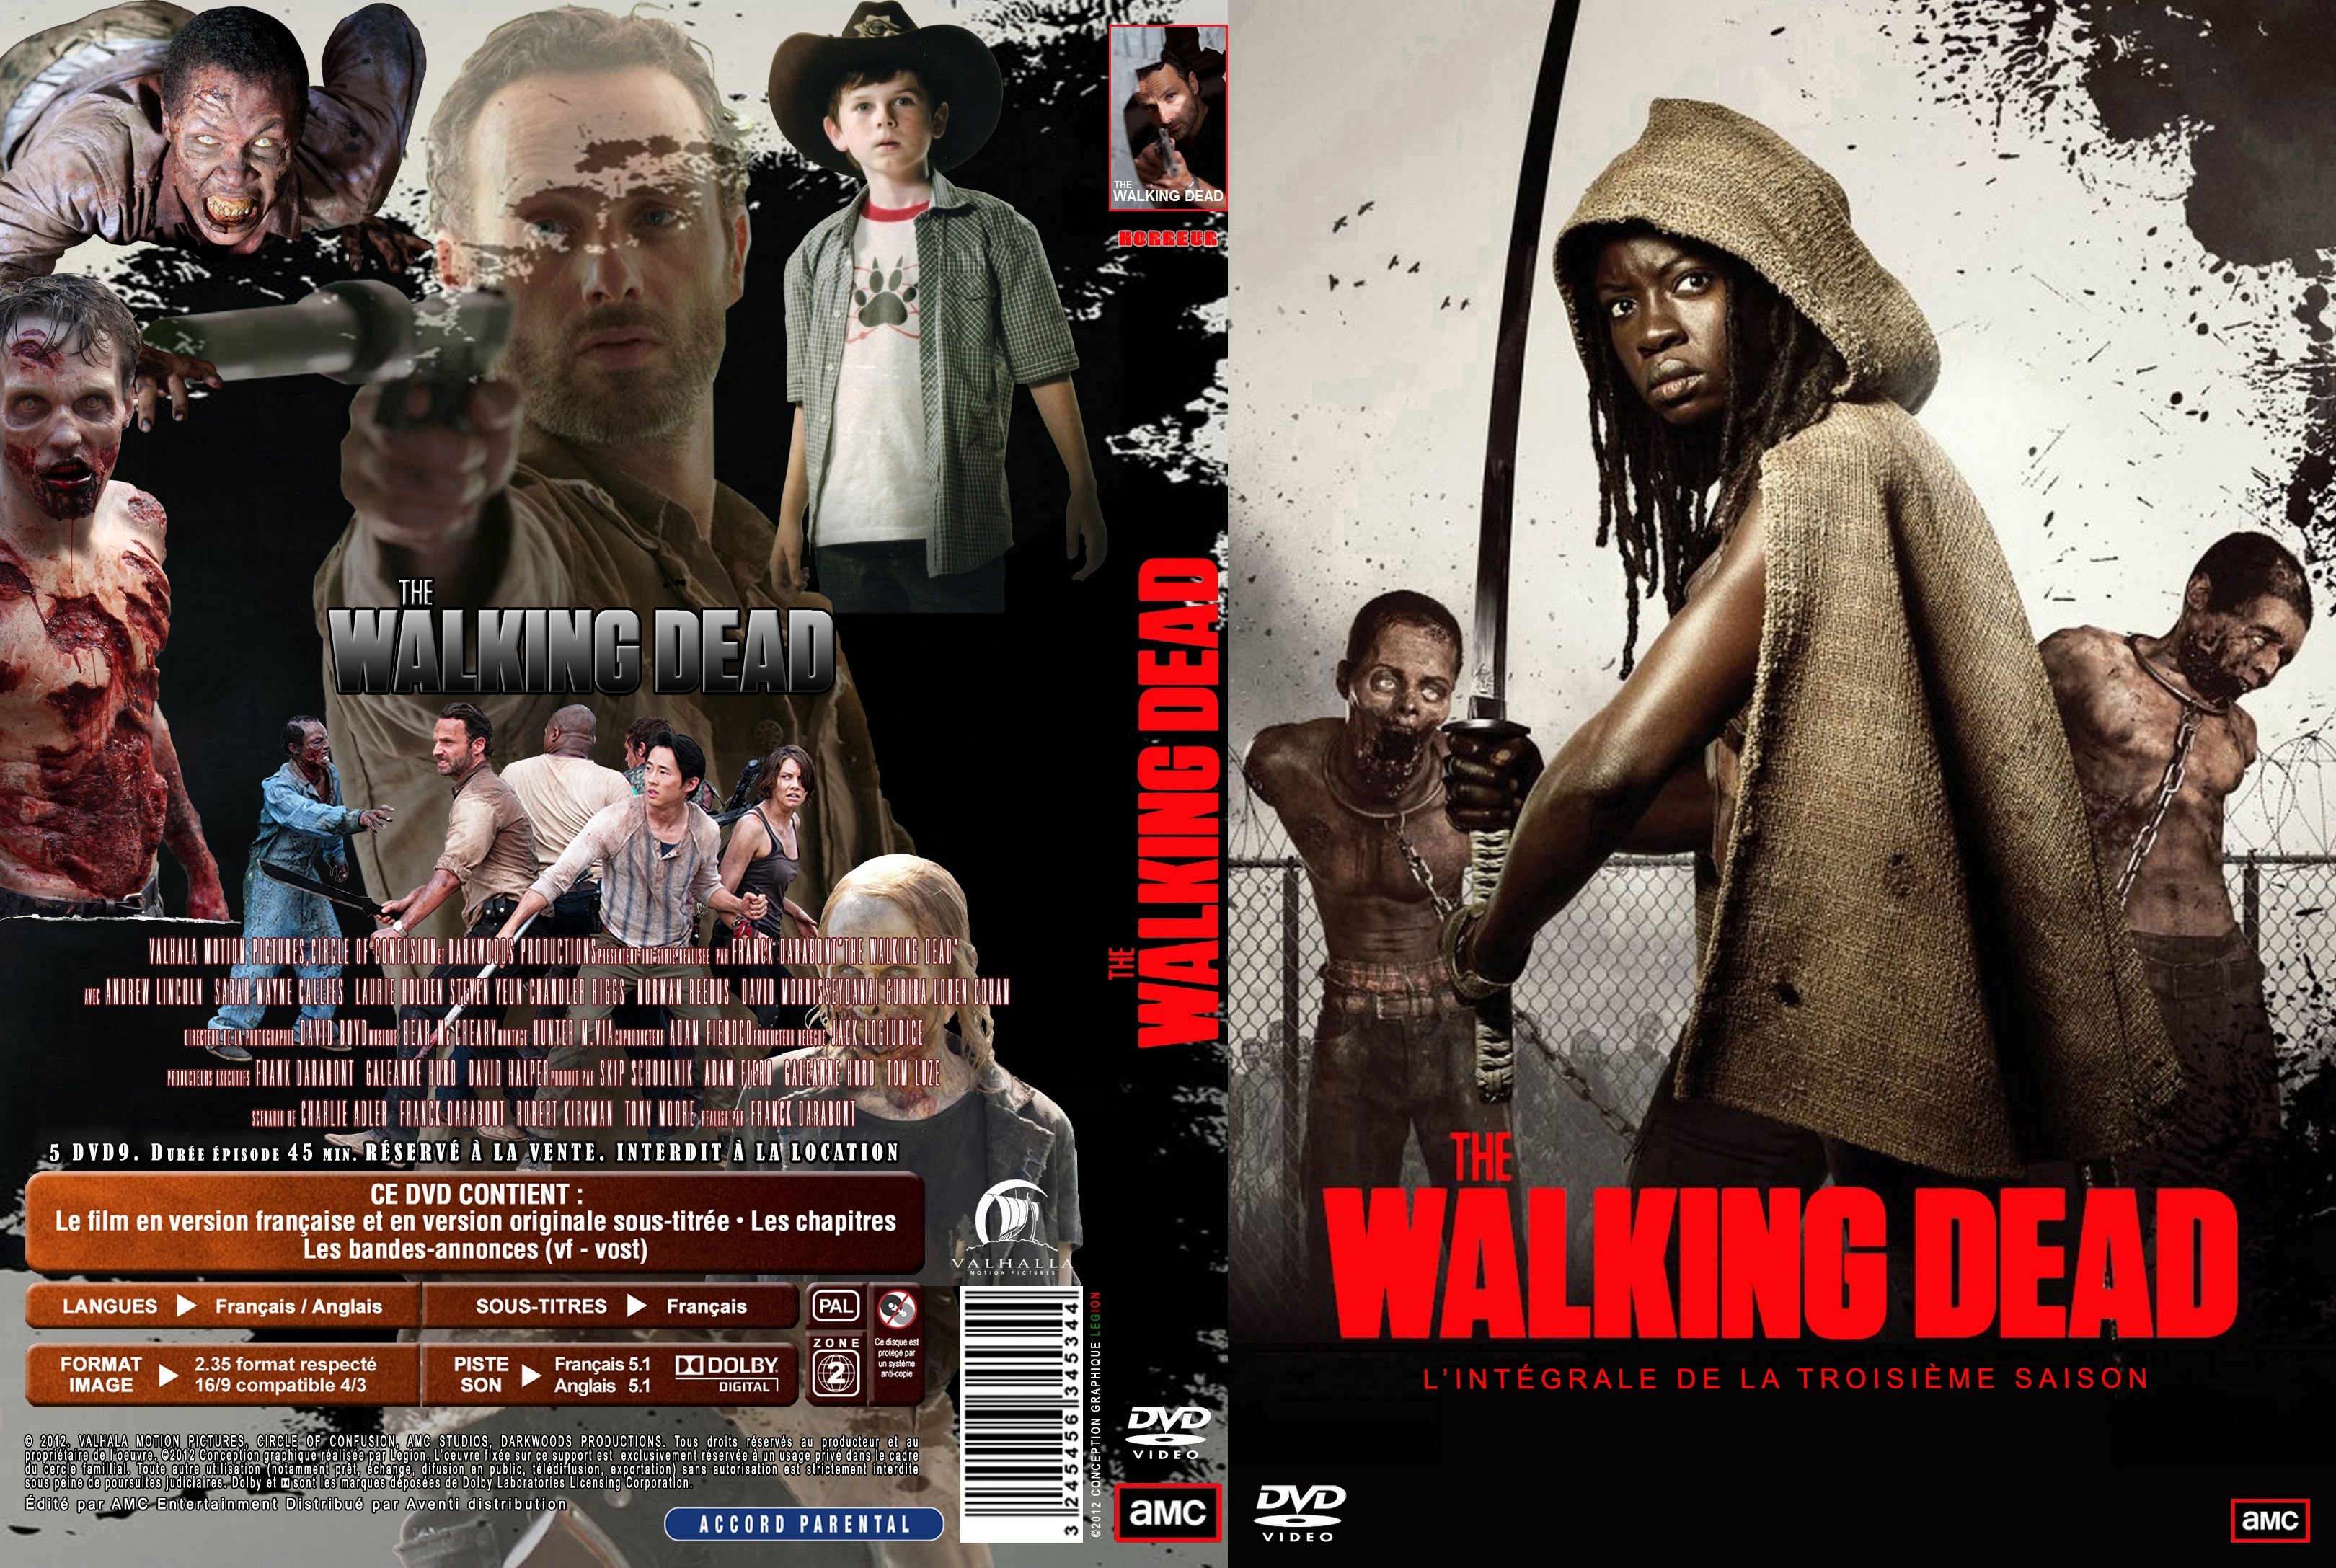 Jaquette DVD The Walking dead Saison 3 custom